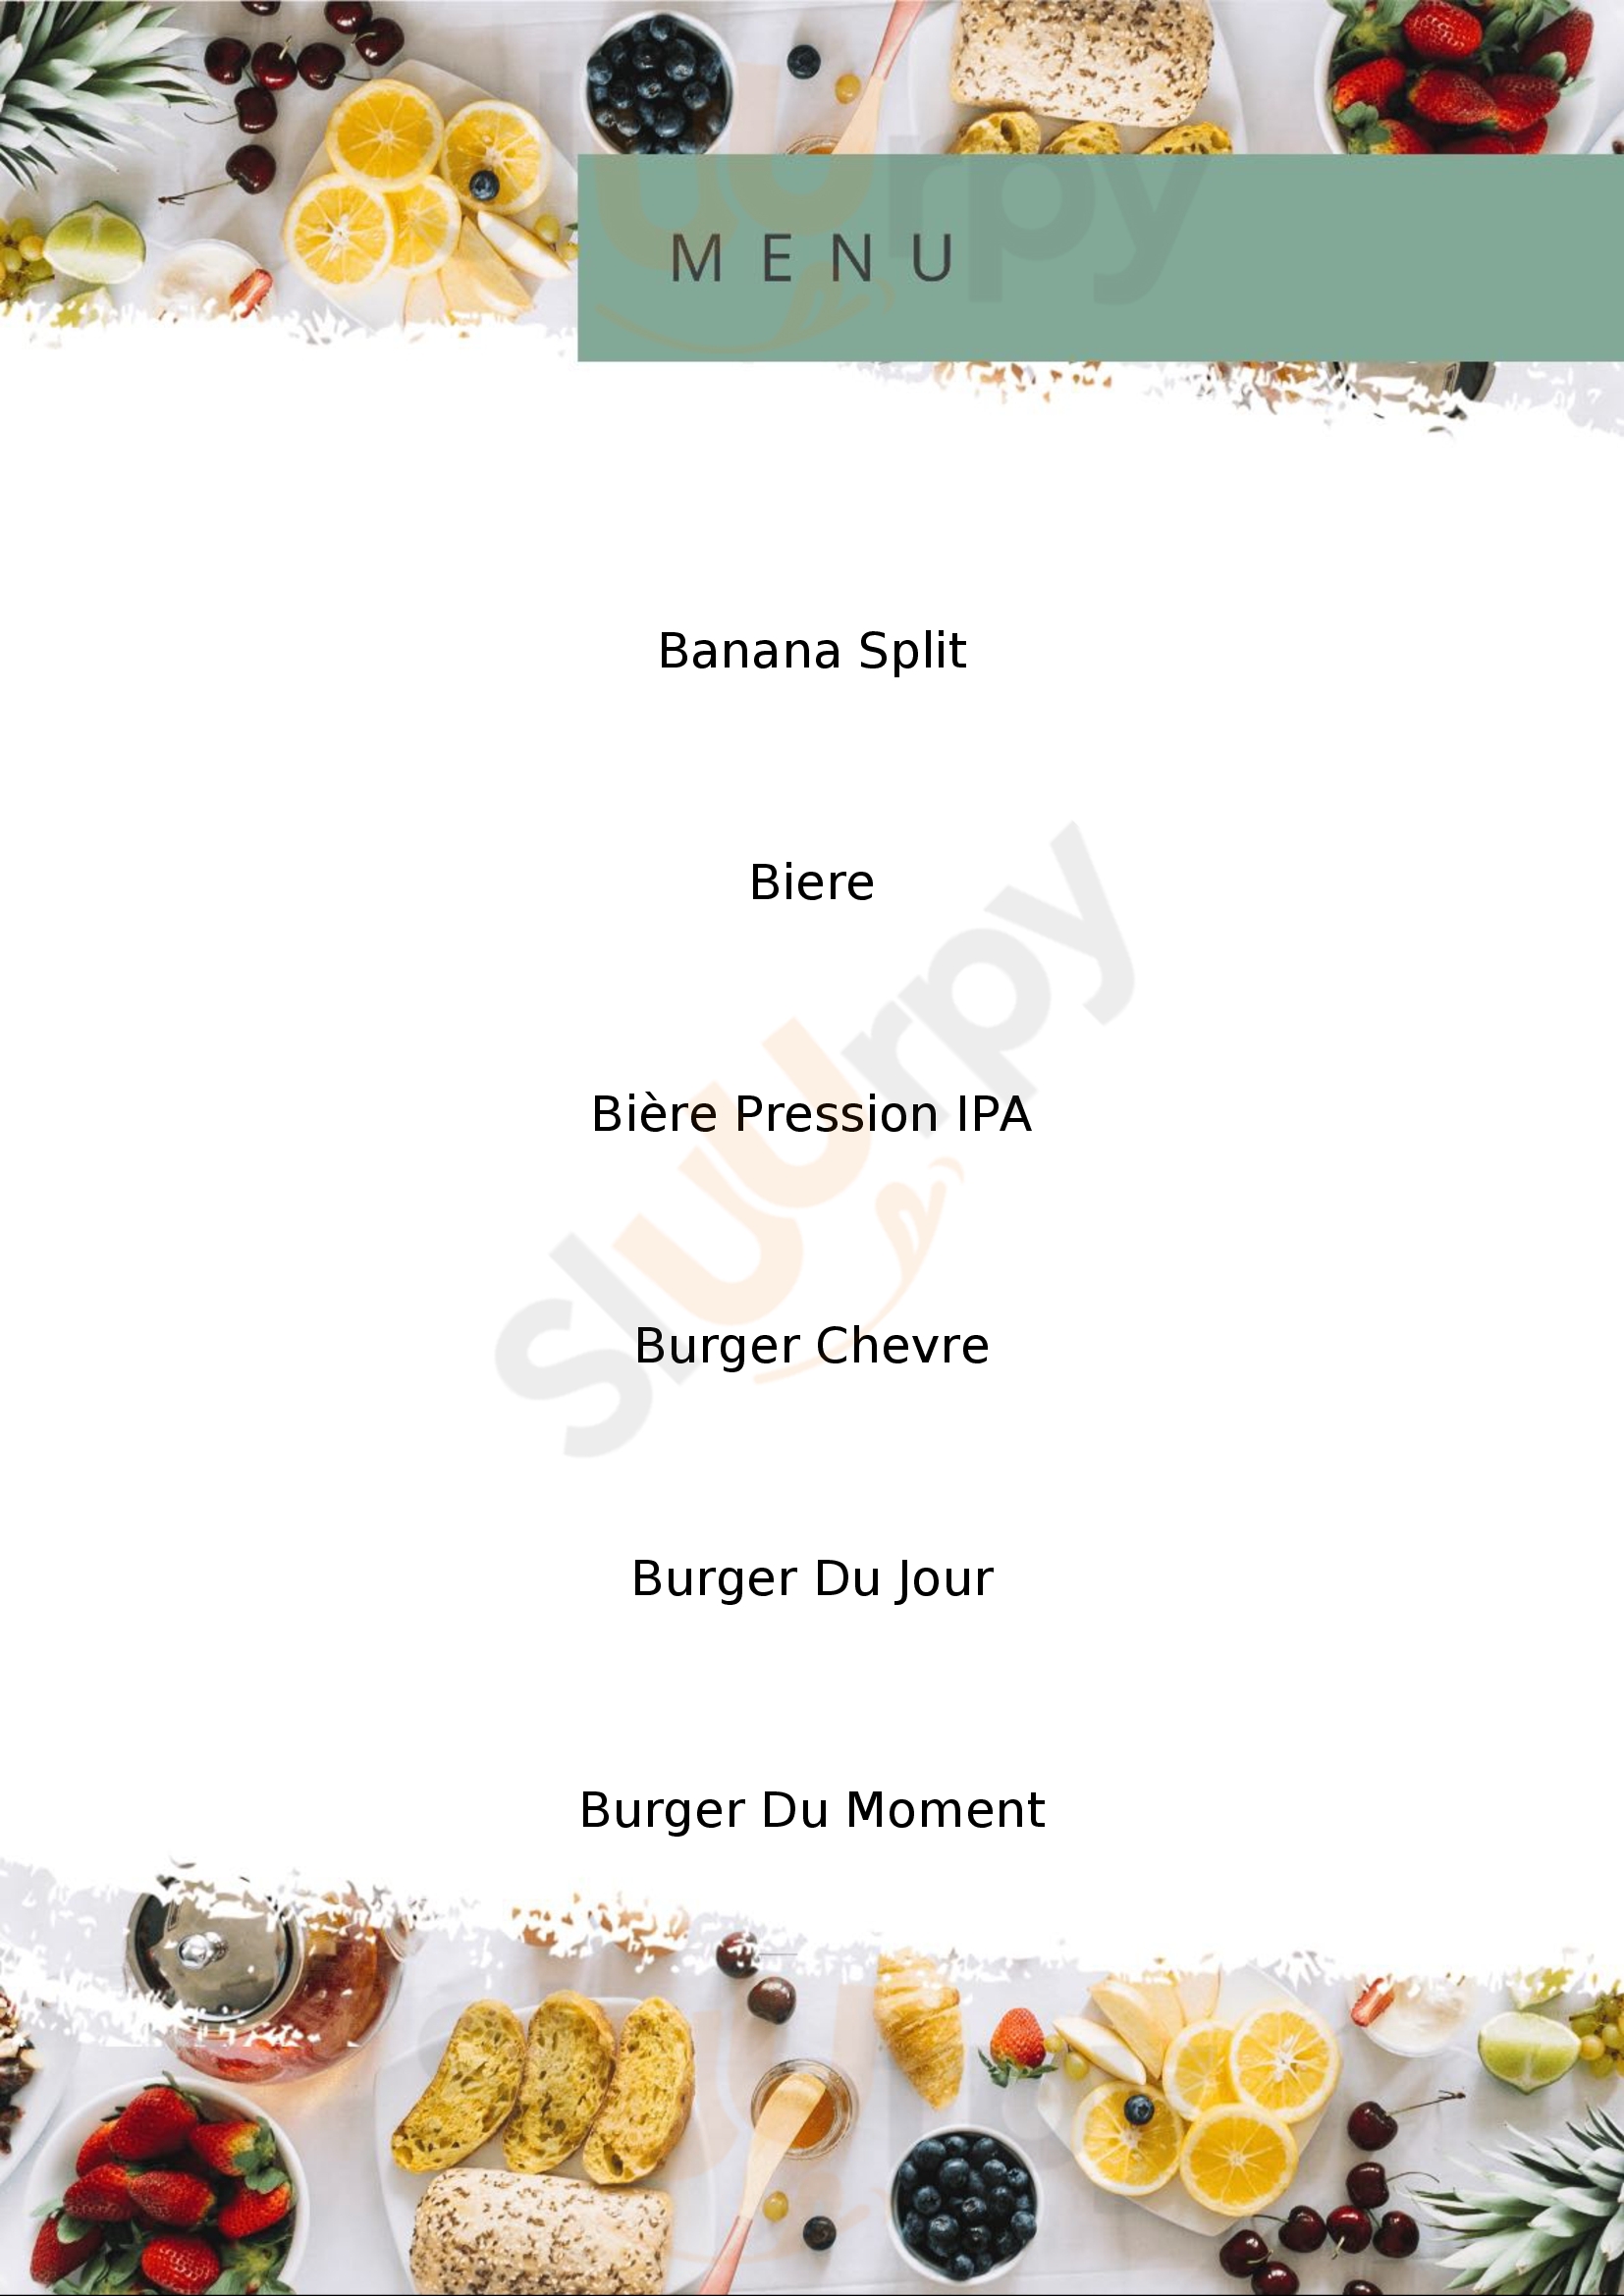 Le Bistro Burger Gérardmer Menu - 1